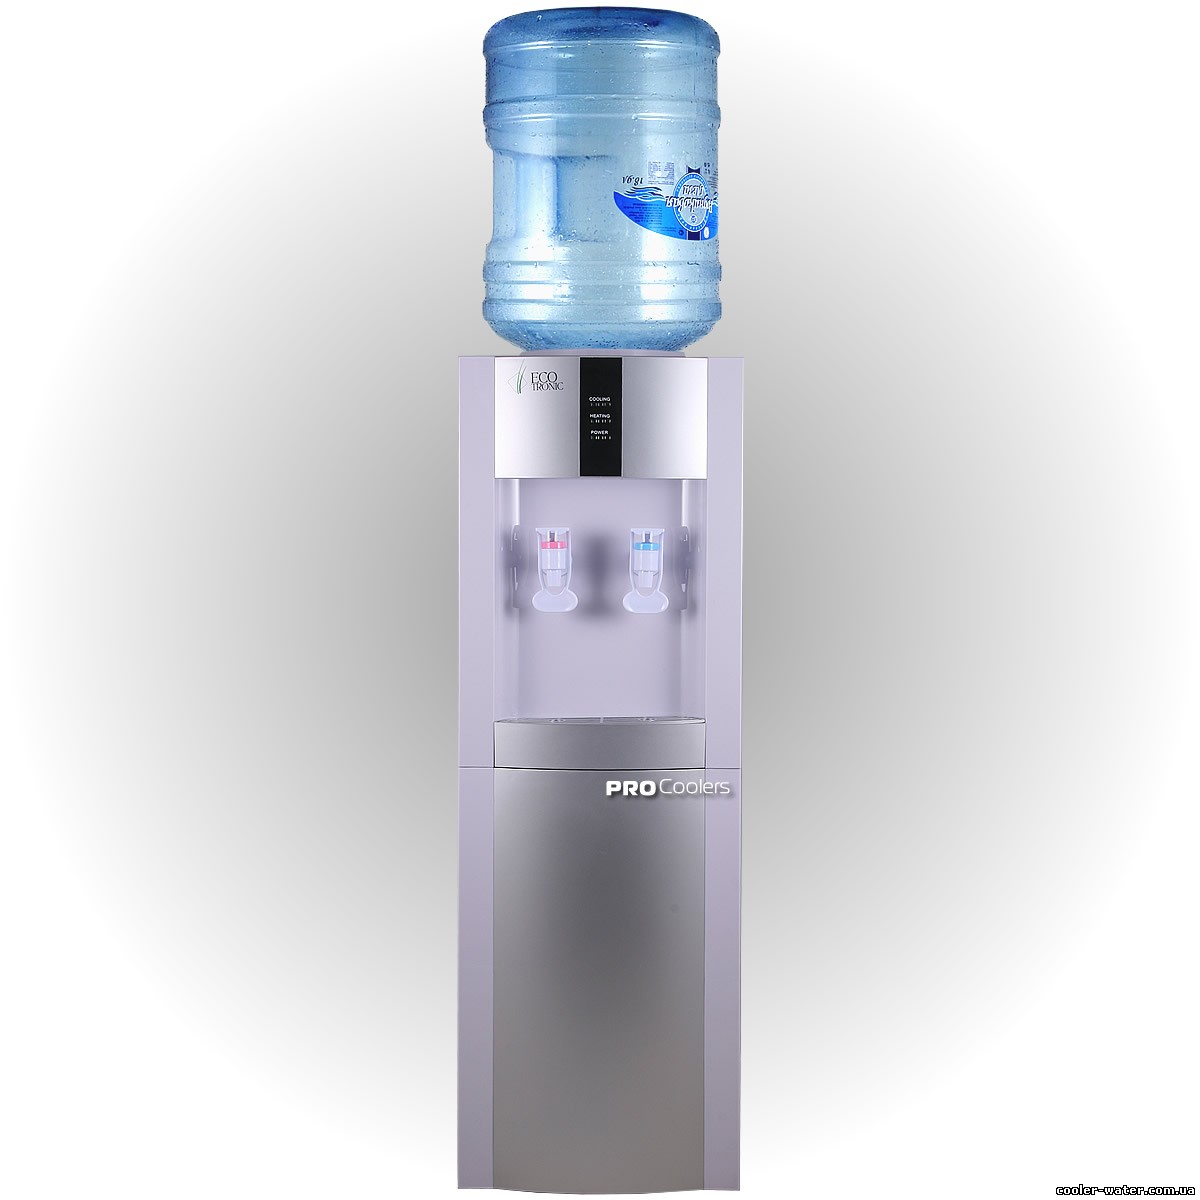 Кулер для воды Ecotronic H1-LN White